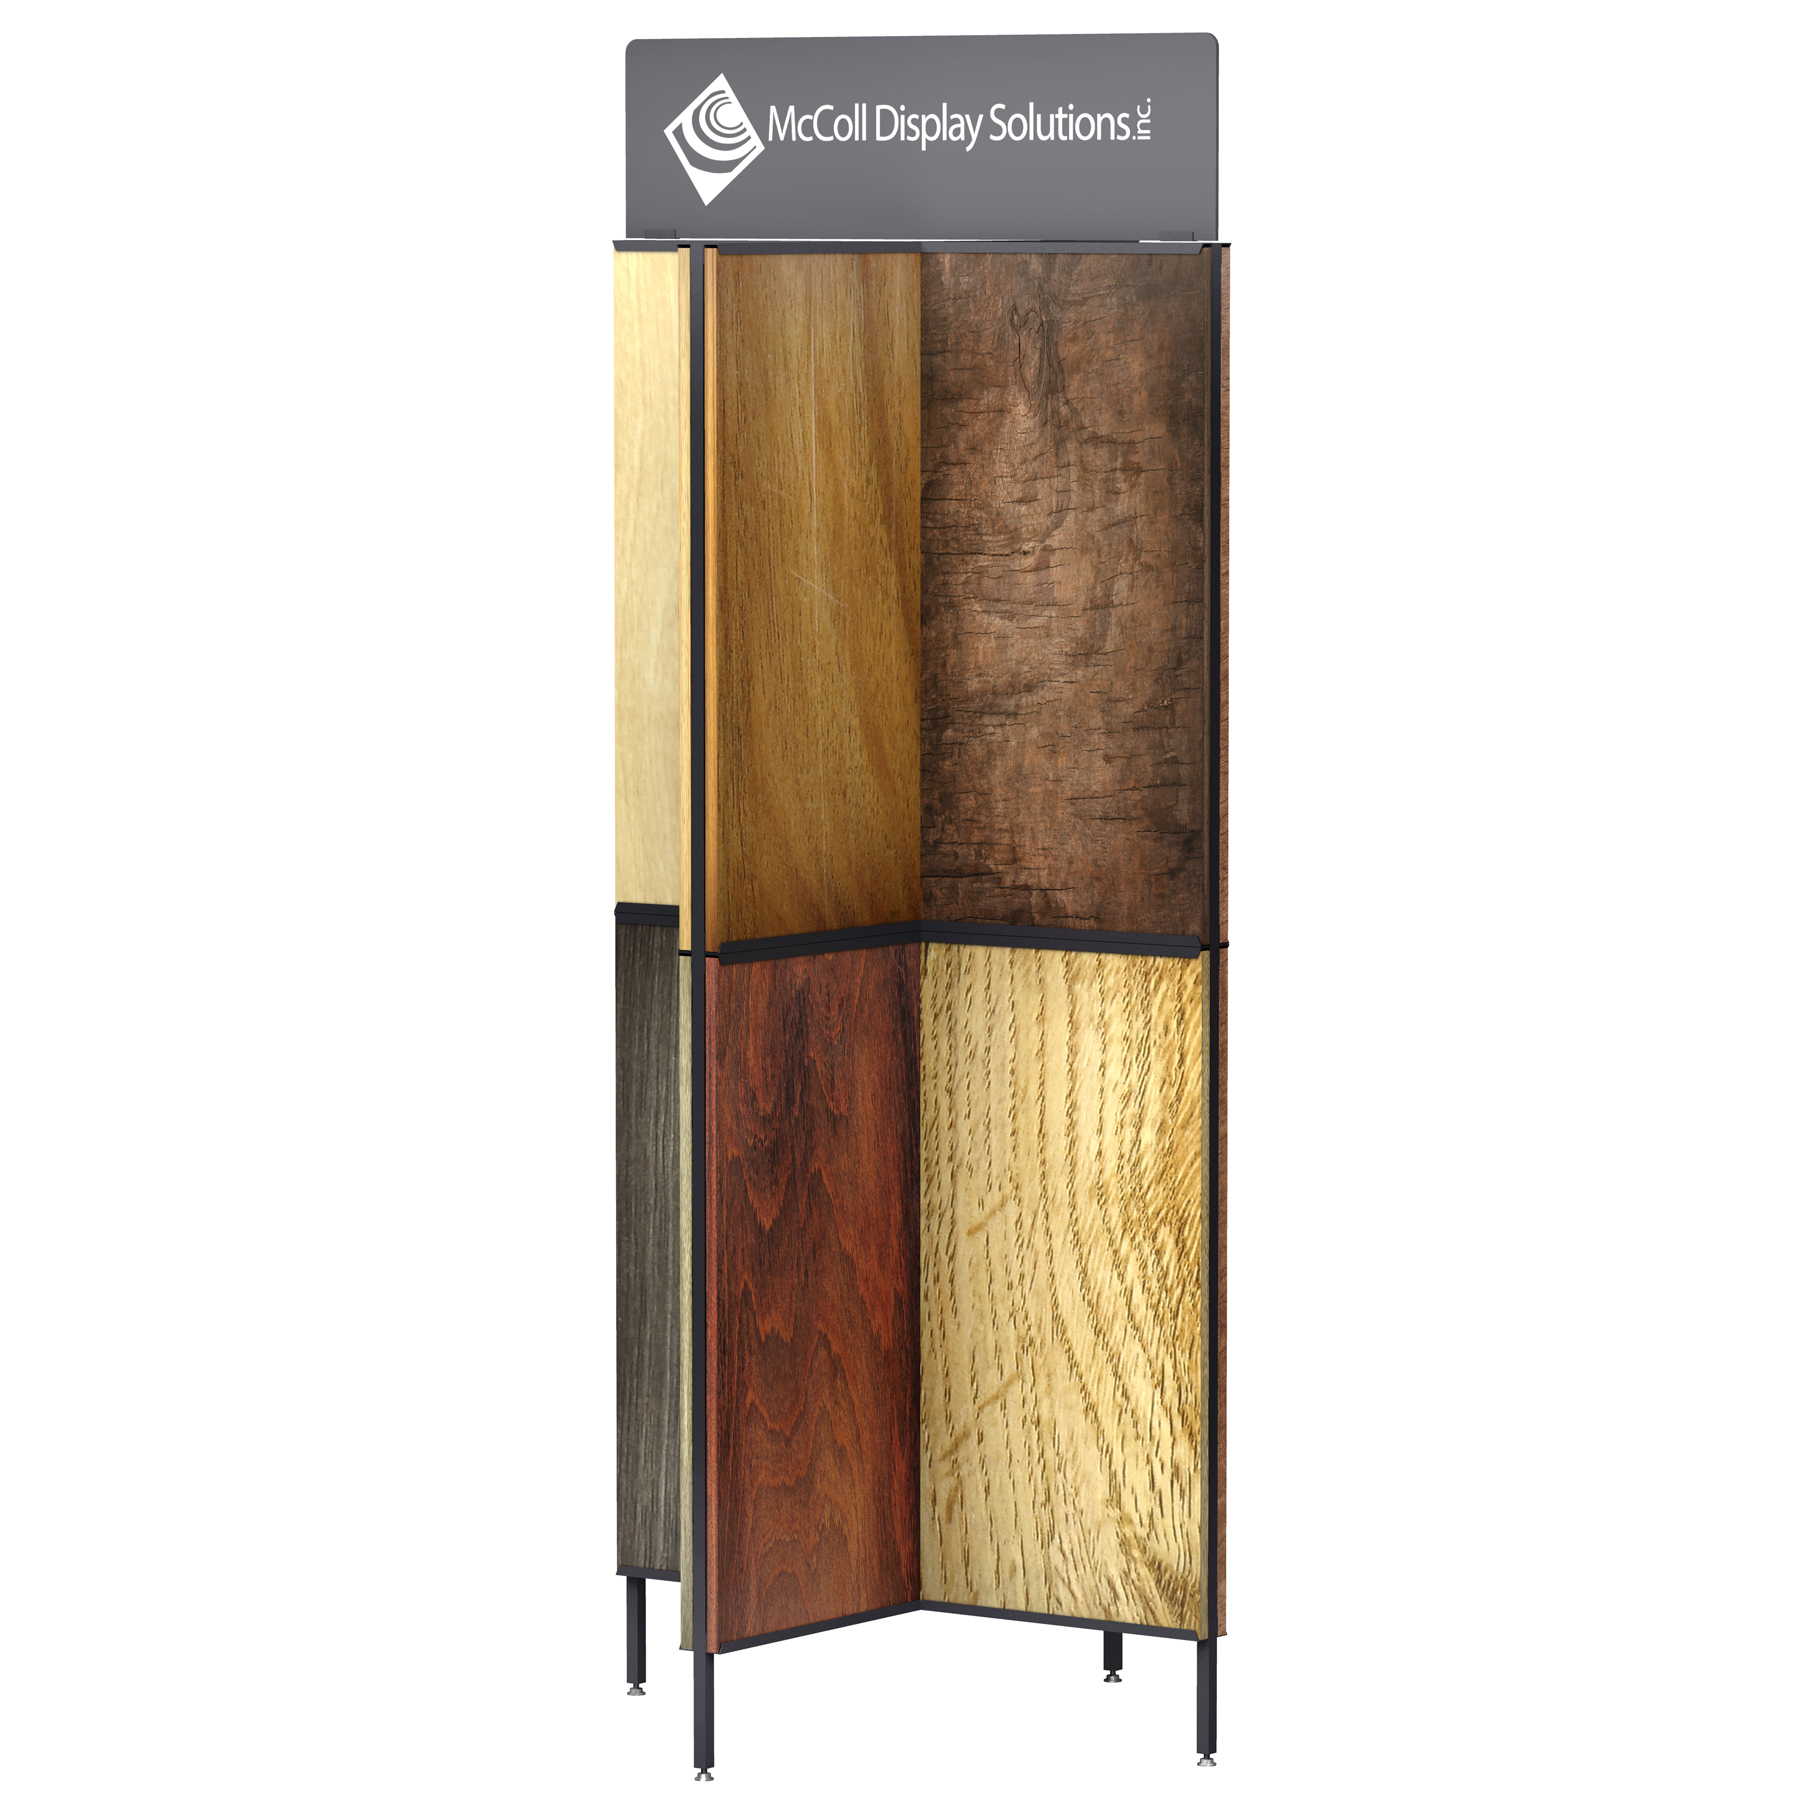 CD40 Tower Hardwood Laminate Wood Flooring Sample System Showroom Displays McColl Display